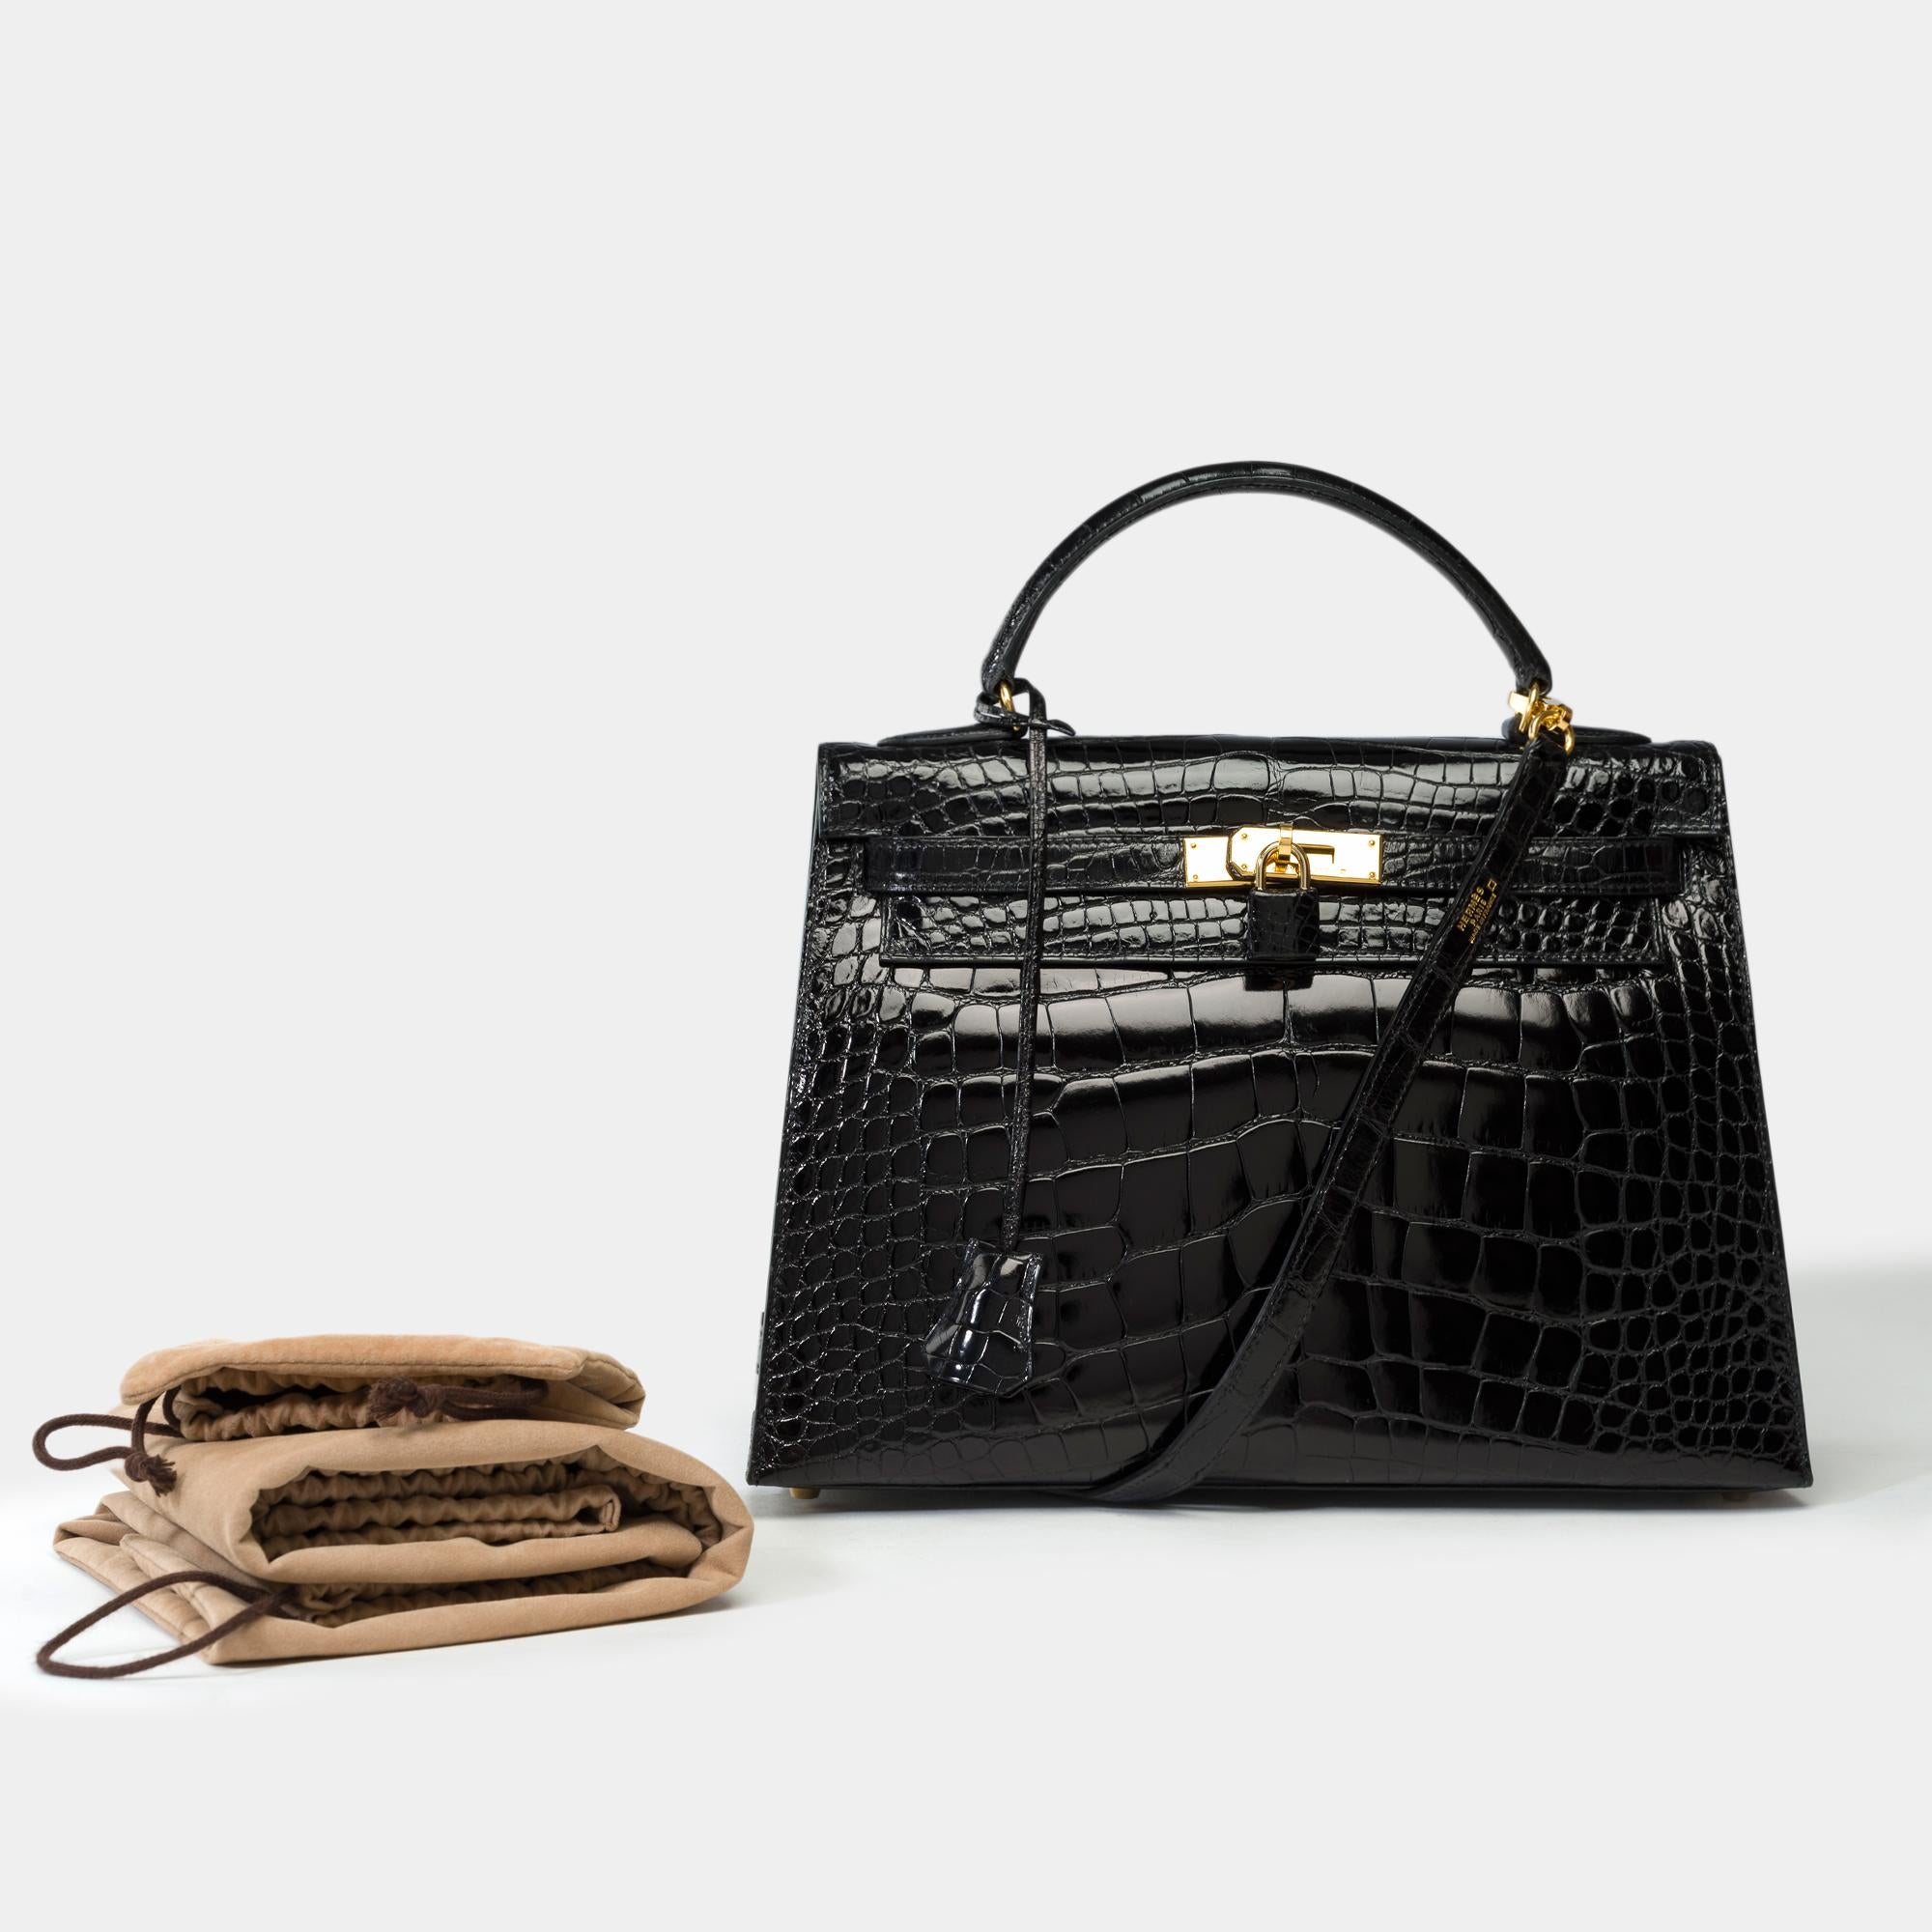 Amazing​ ​&​ ​Rare​ ​Hermès​ ​Kelly​ ​32​ ​handbag​ ​strap​ ​in​ ​Black​ ​Alligator​ ​Mississippiensis​ ​,​ ​removable​ ​shoulder​ ​strap​ ​in​ ​black​ ​alligator,​ ​fasteners​ ​and​ ​clasp​ ​in​ ​gold​ ​plated​ ​metal,​ ​handle​ ​in​ ​black​